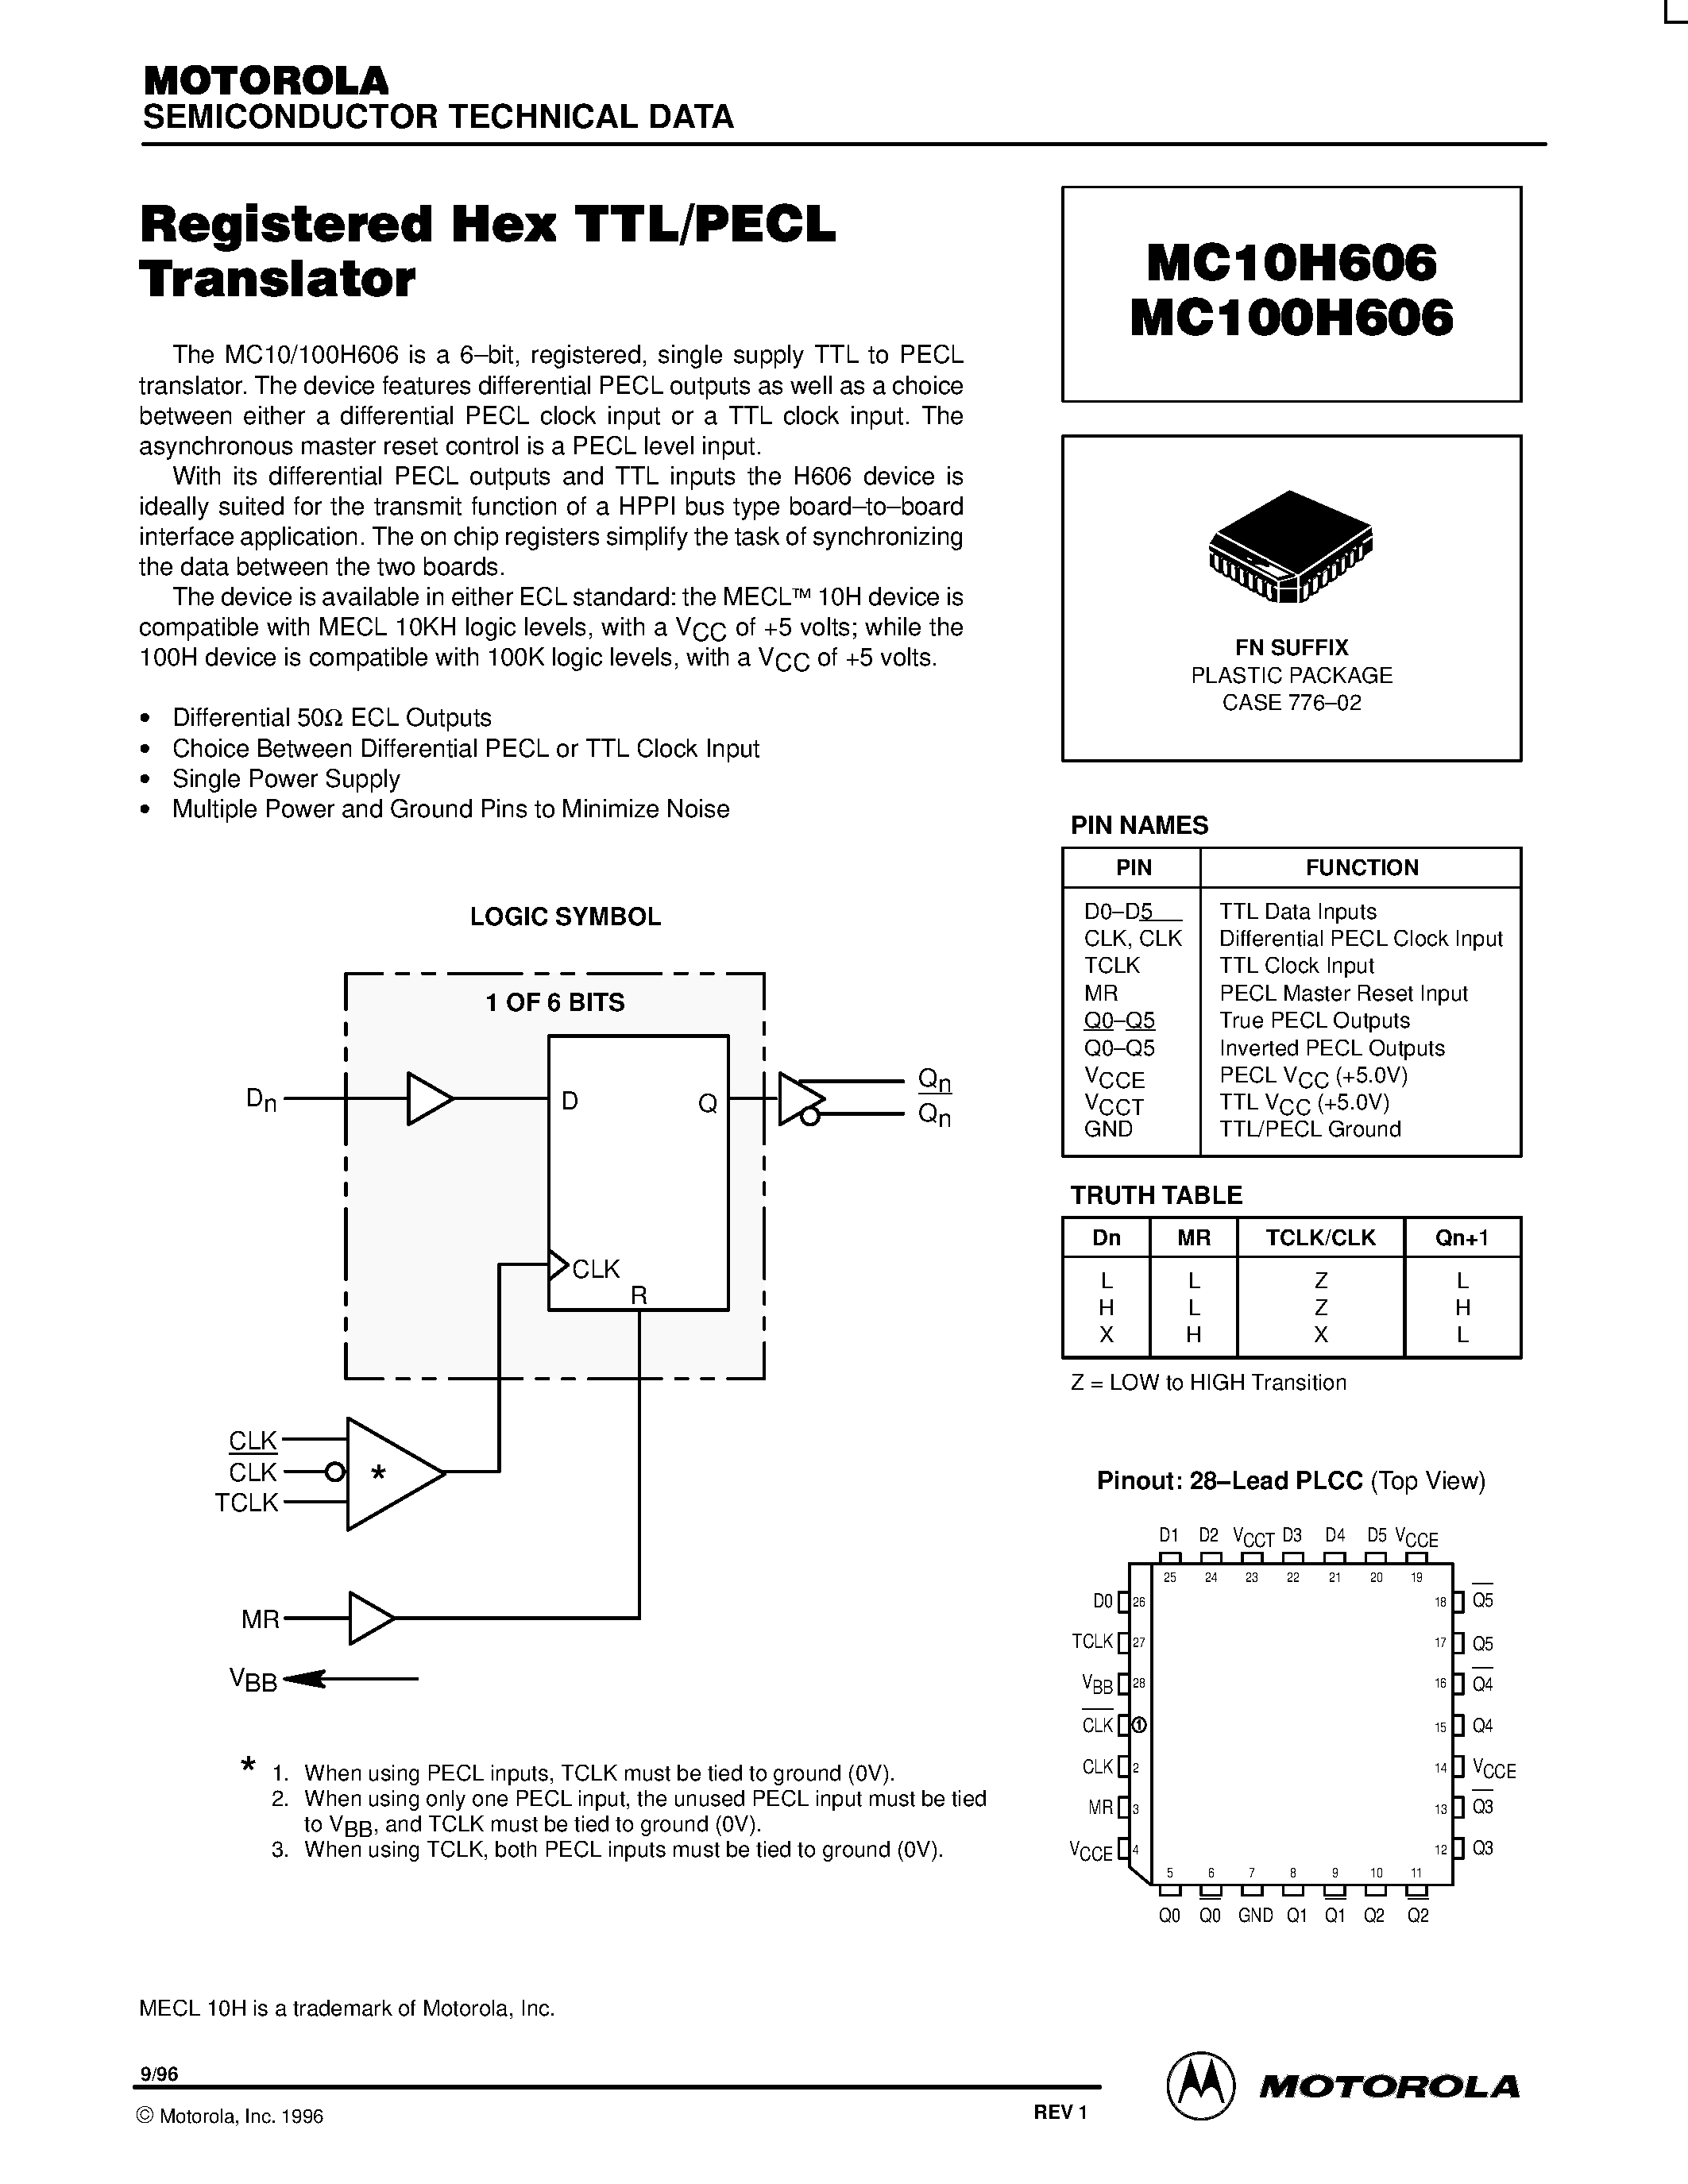 Datasheet MC10H606FN - Registered Hex TTL/PECL Translator page 1